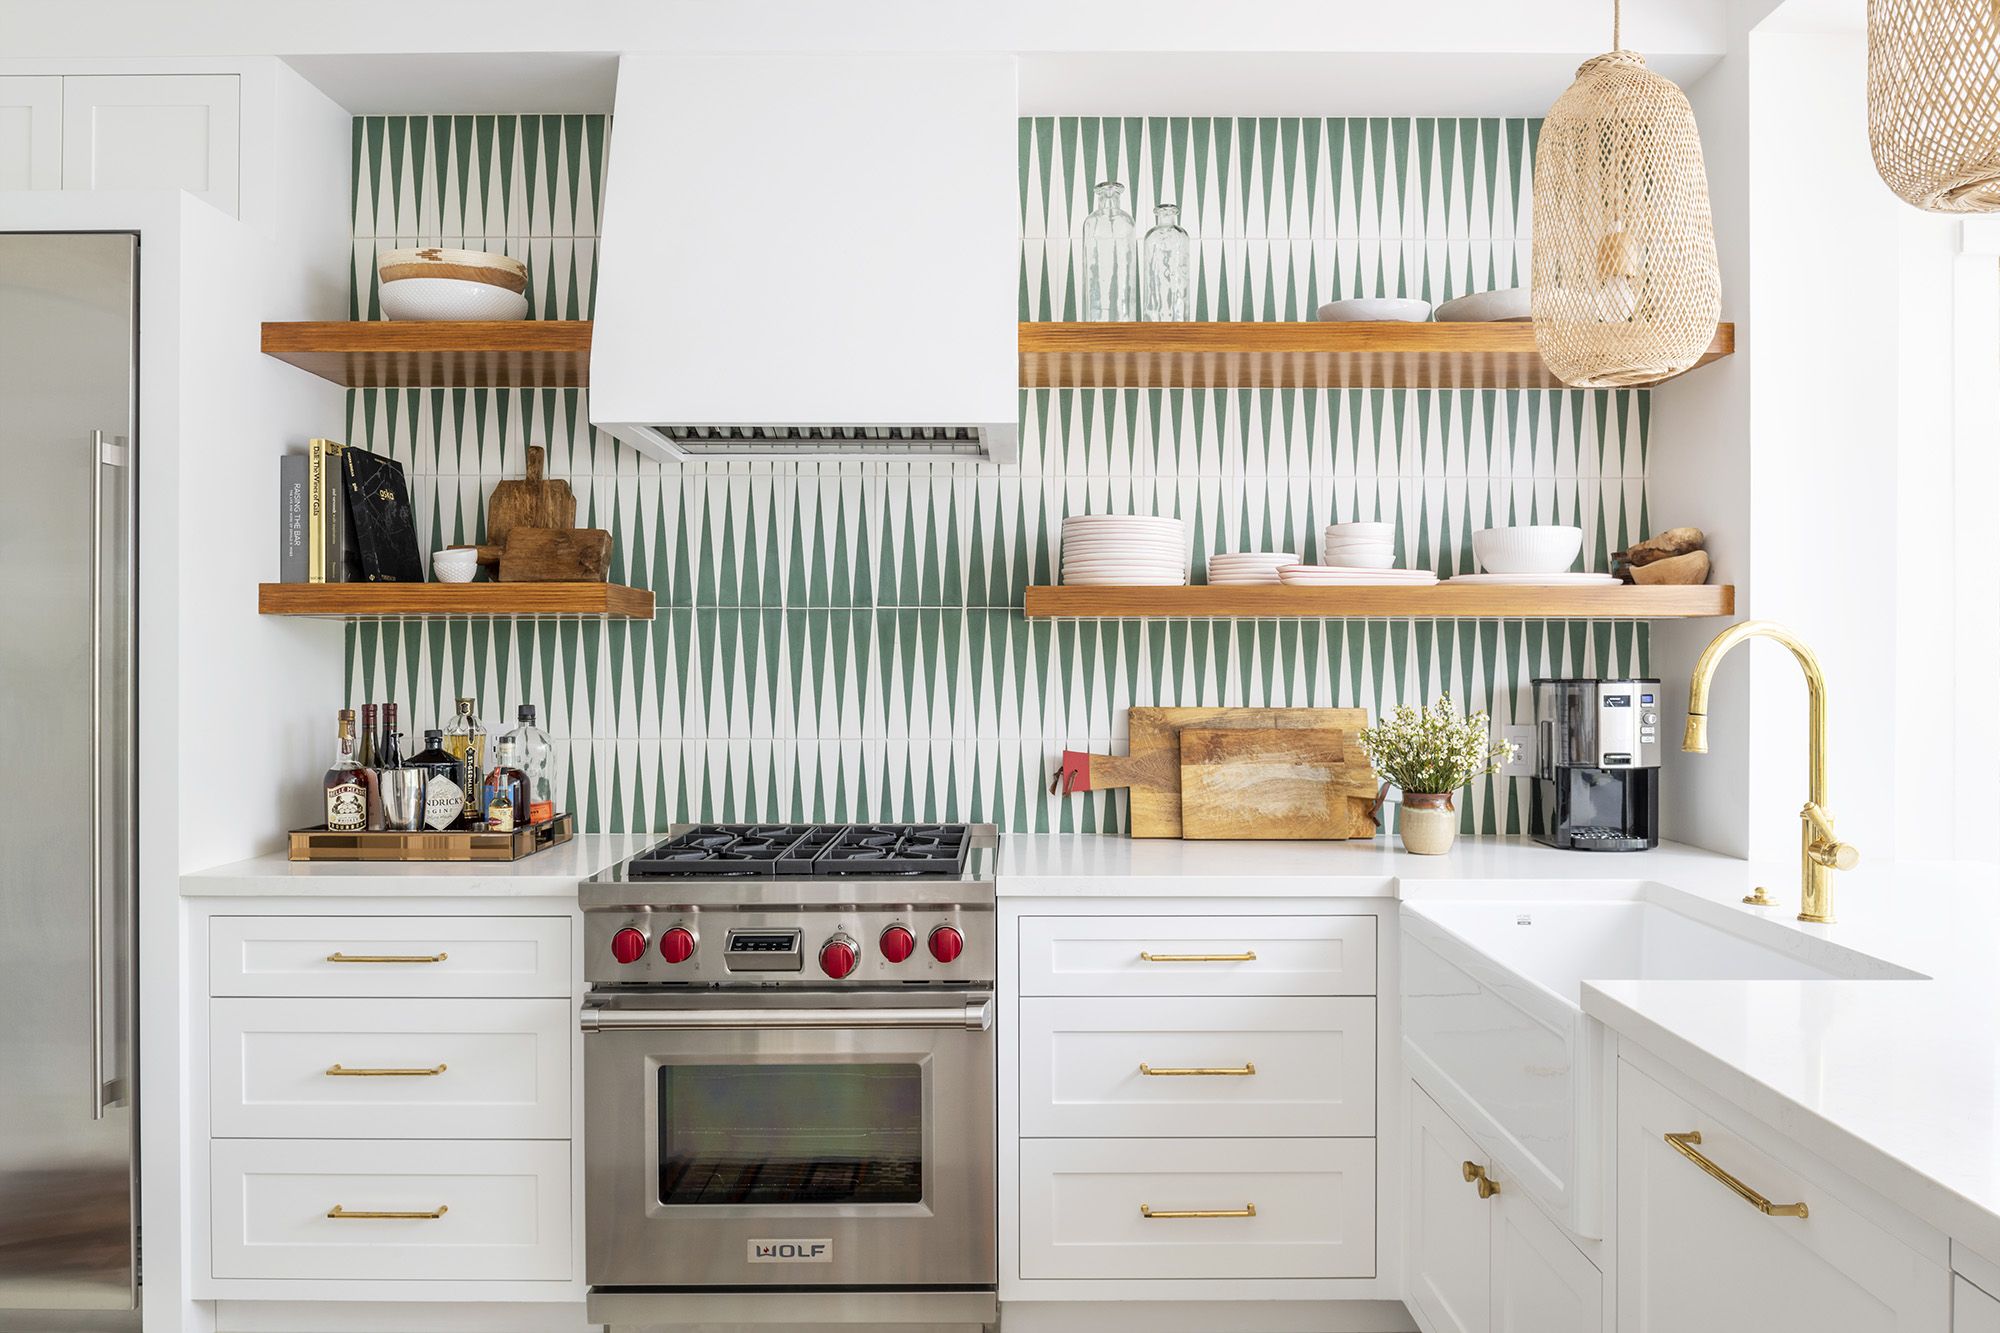 21 Best Small Kitchen Design Ideas   Tiny Kitchen Decorating